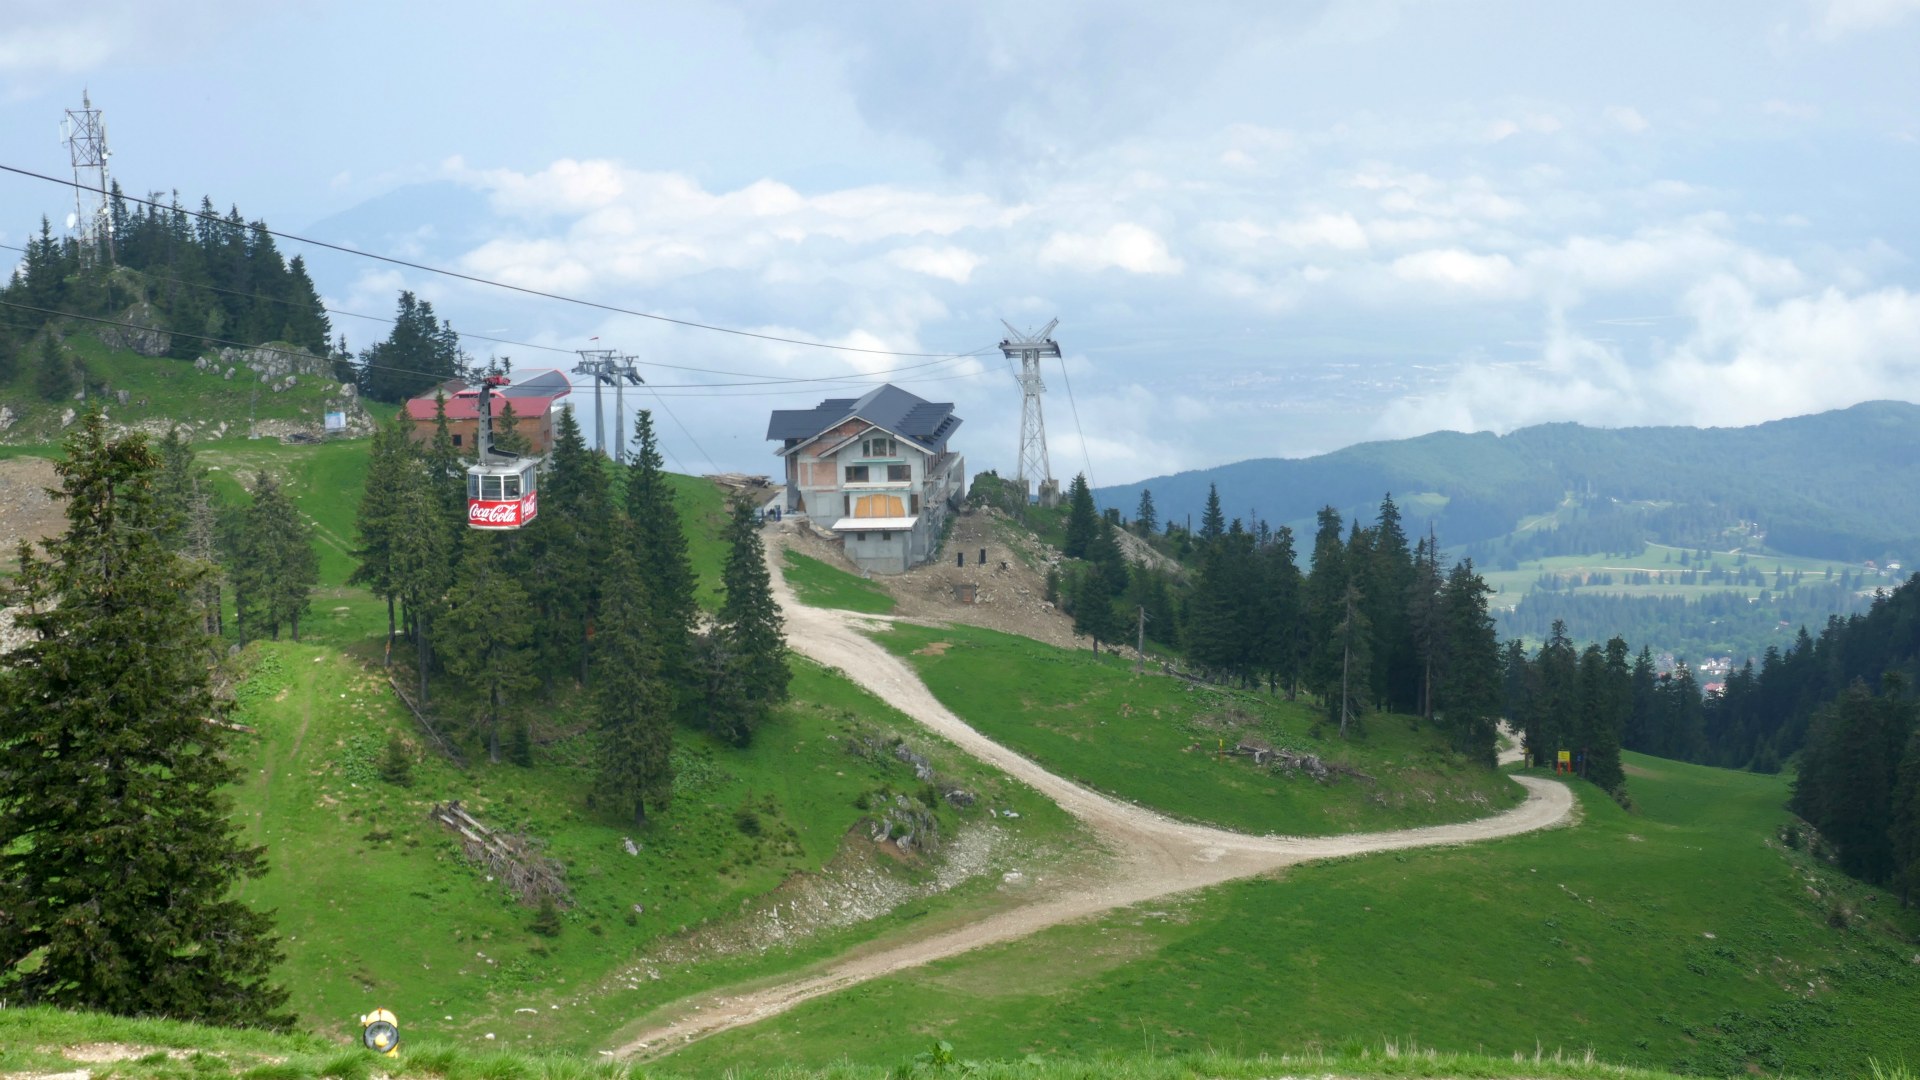 Poiana Brasov Ski Resort